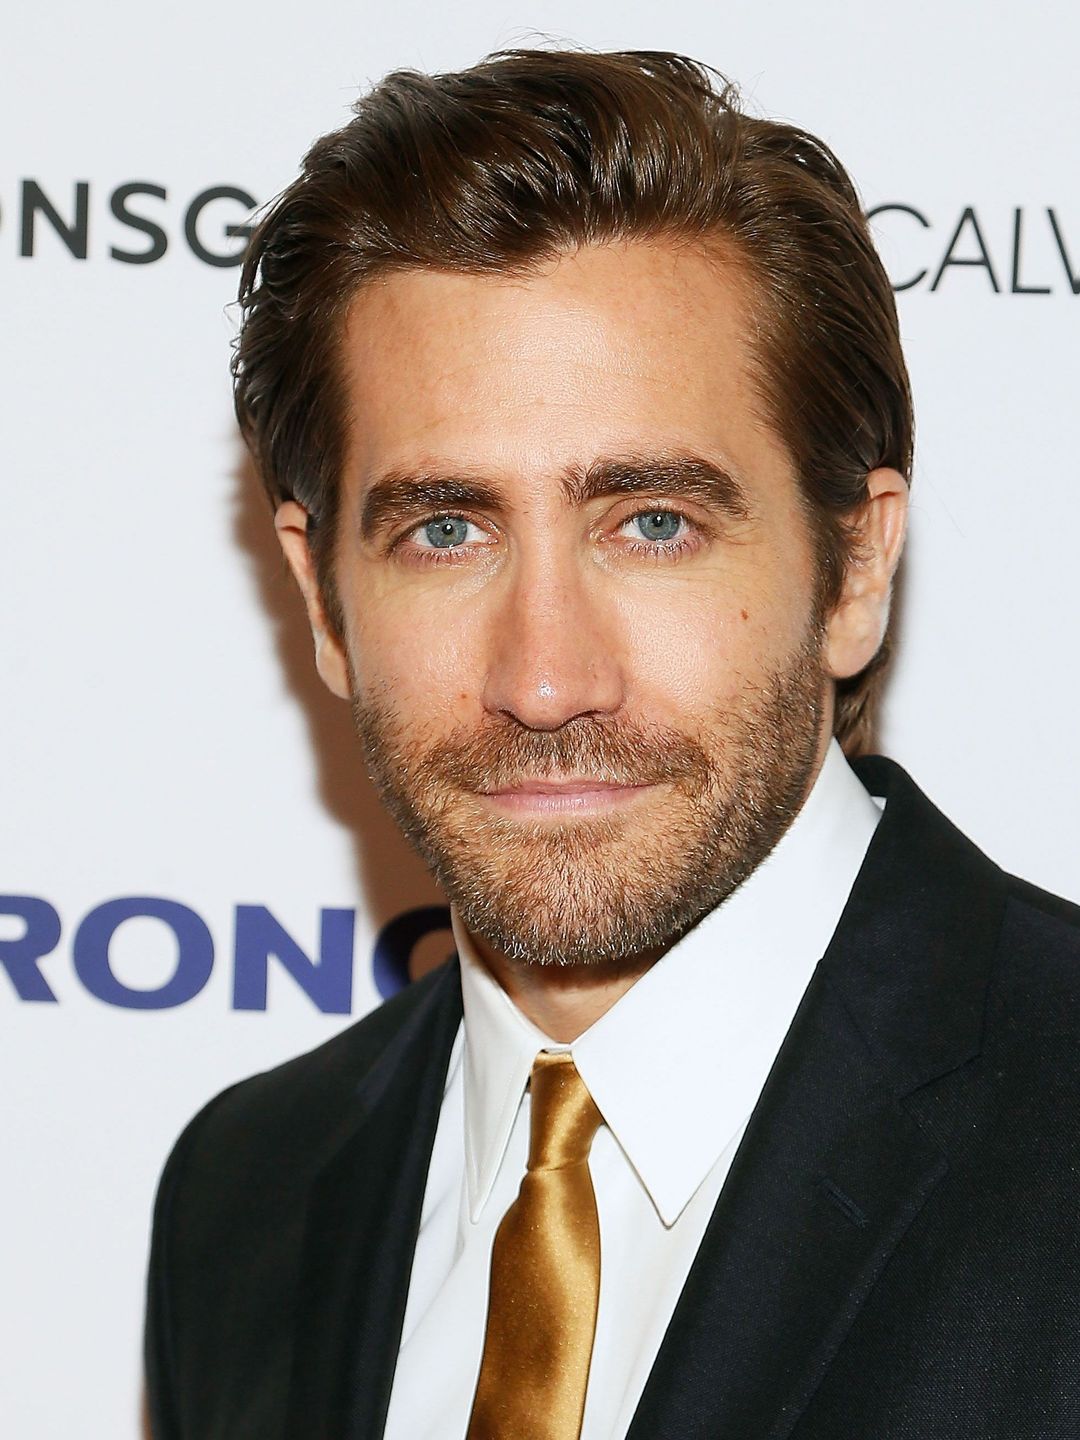 Jake Gyllenhaal current look